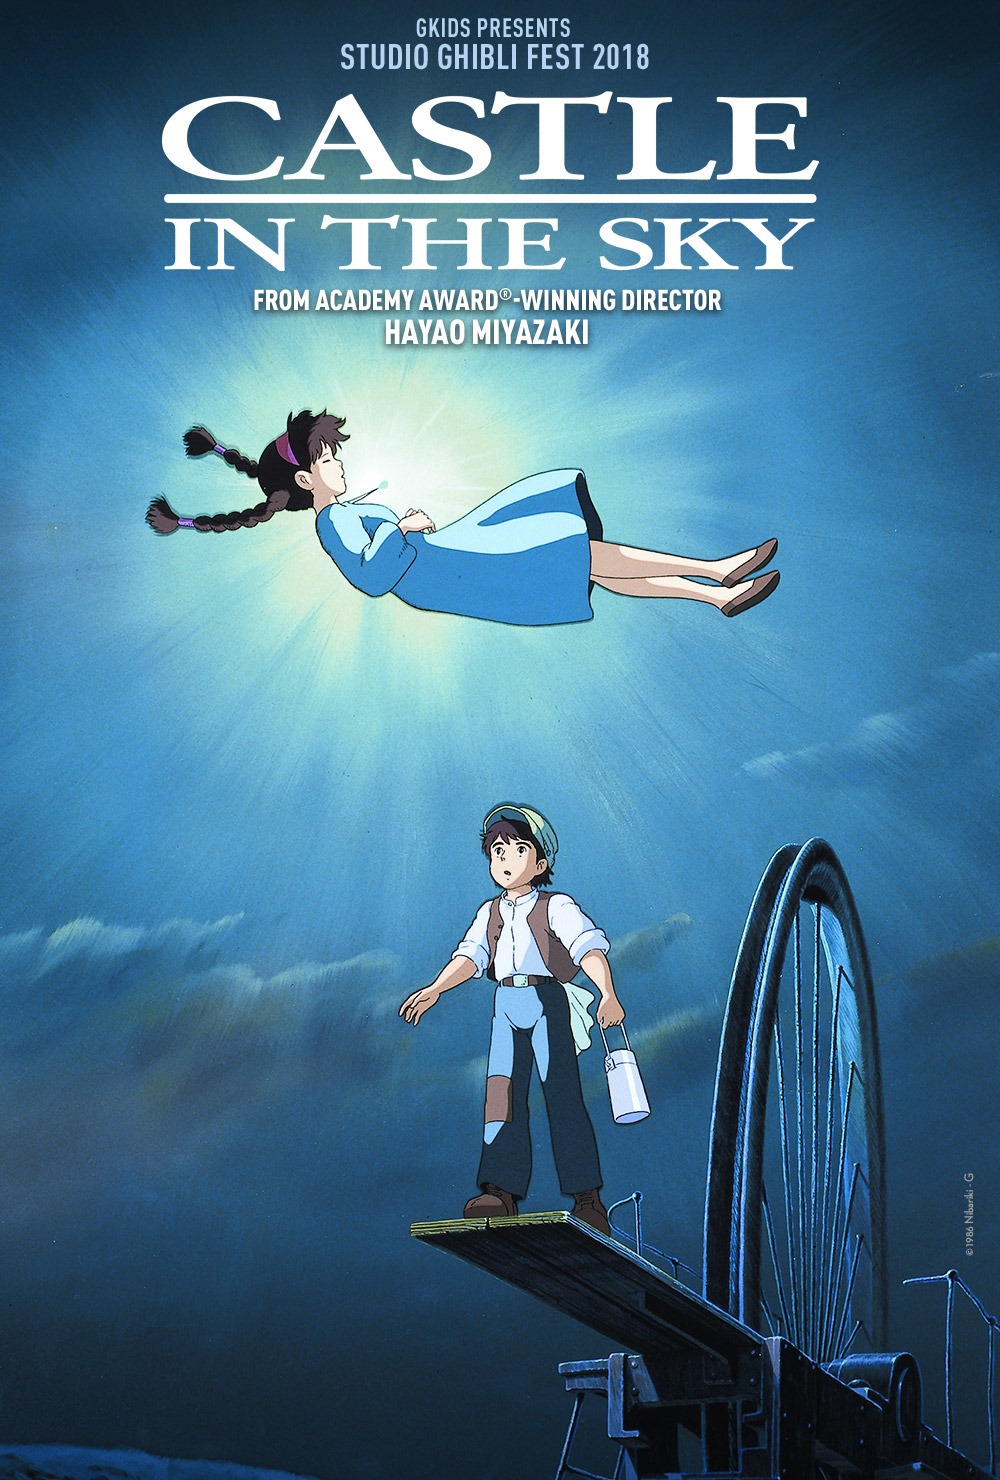 Castle in the Sky Studio Ghibli Fest 2018 at an AMC Theatre near you.